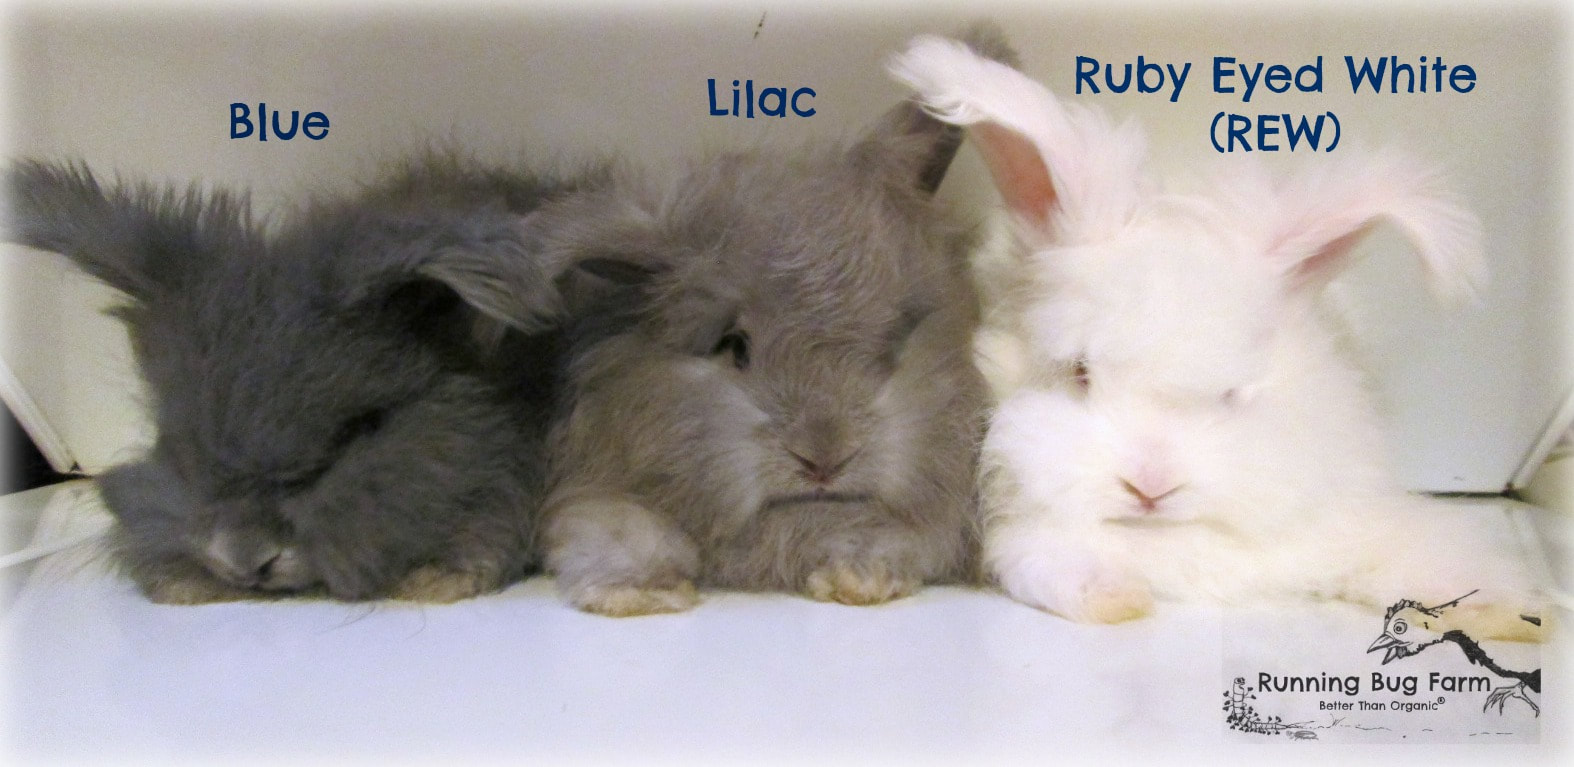 Angora rabbit color comparison between  blue, lilac, and REW (Ruby Eyed White) English Angora jr bunny rabbits